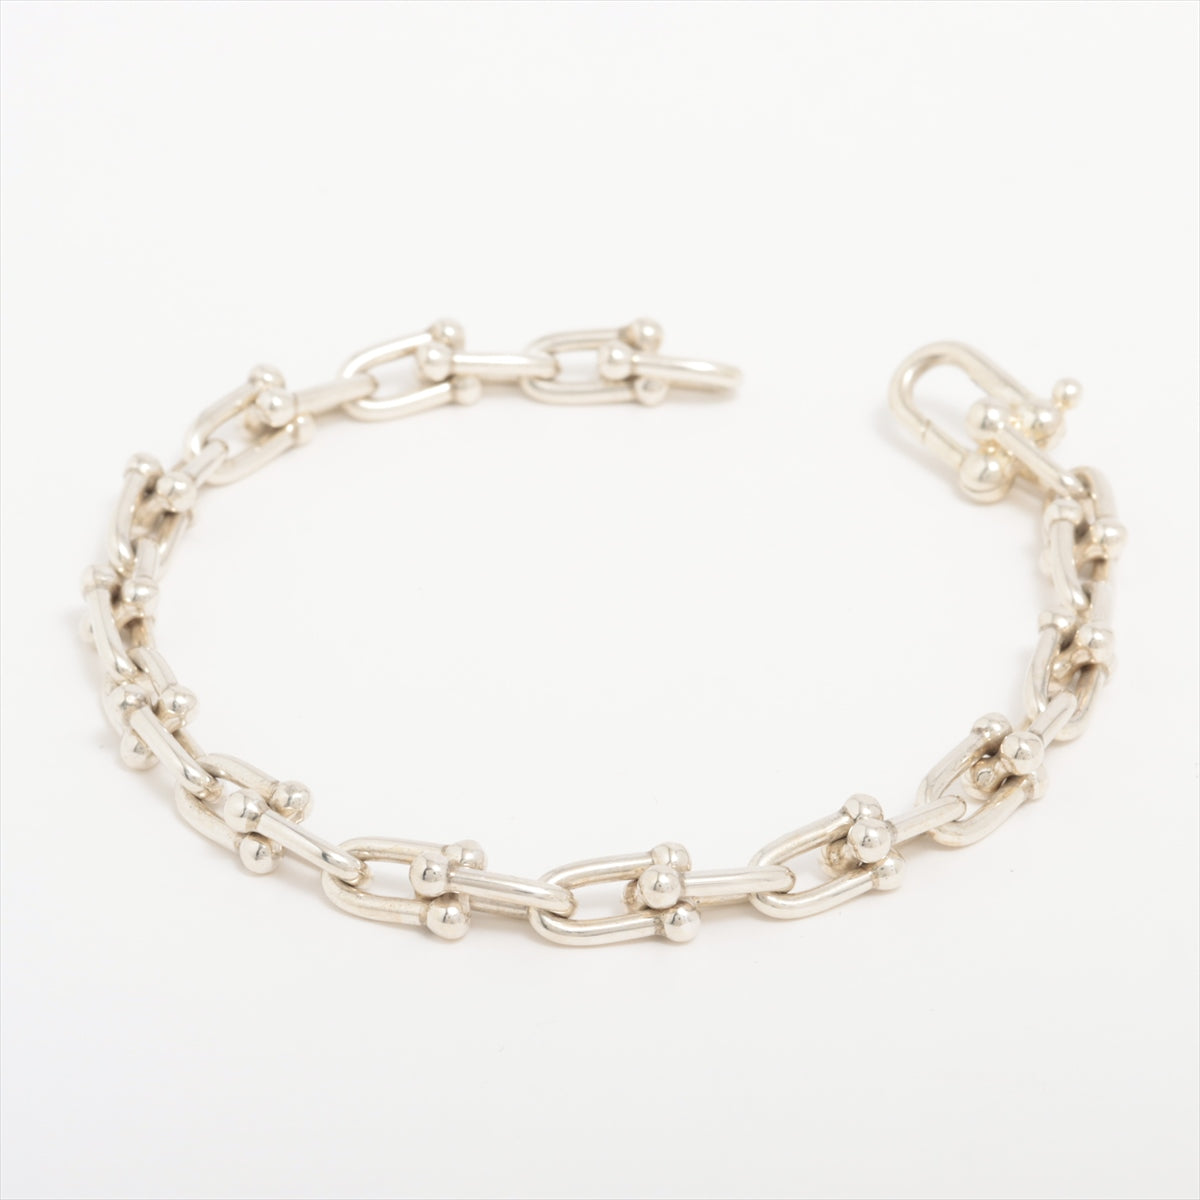 Tiffany Hardware small link Bracelet 925 19.3g Silver